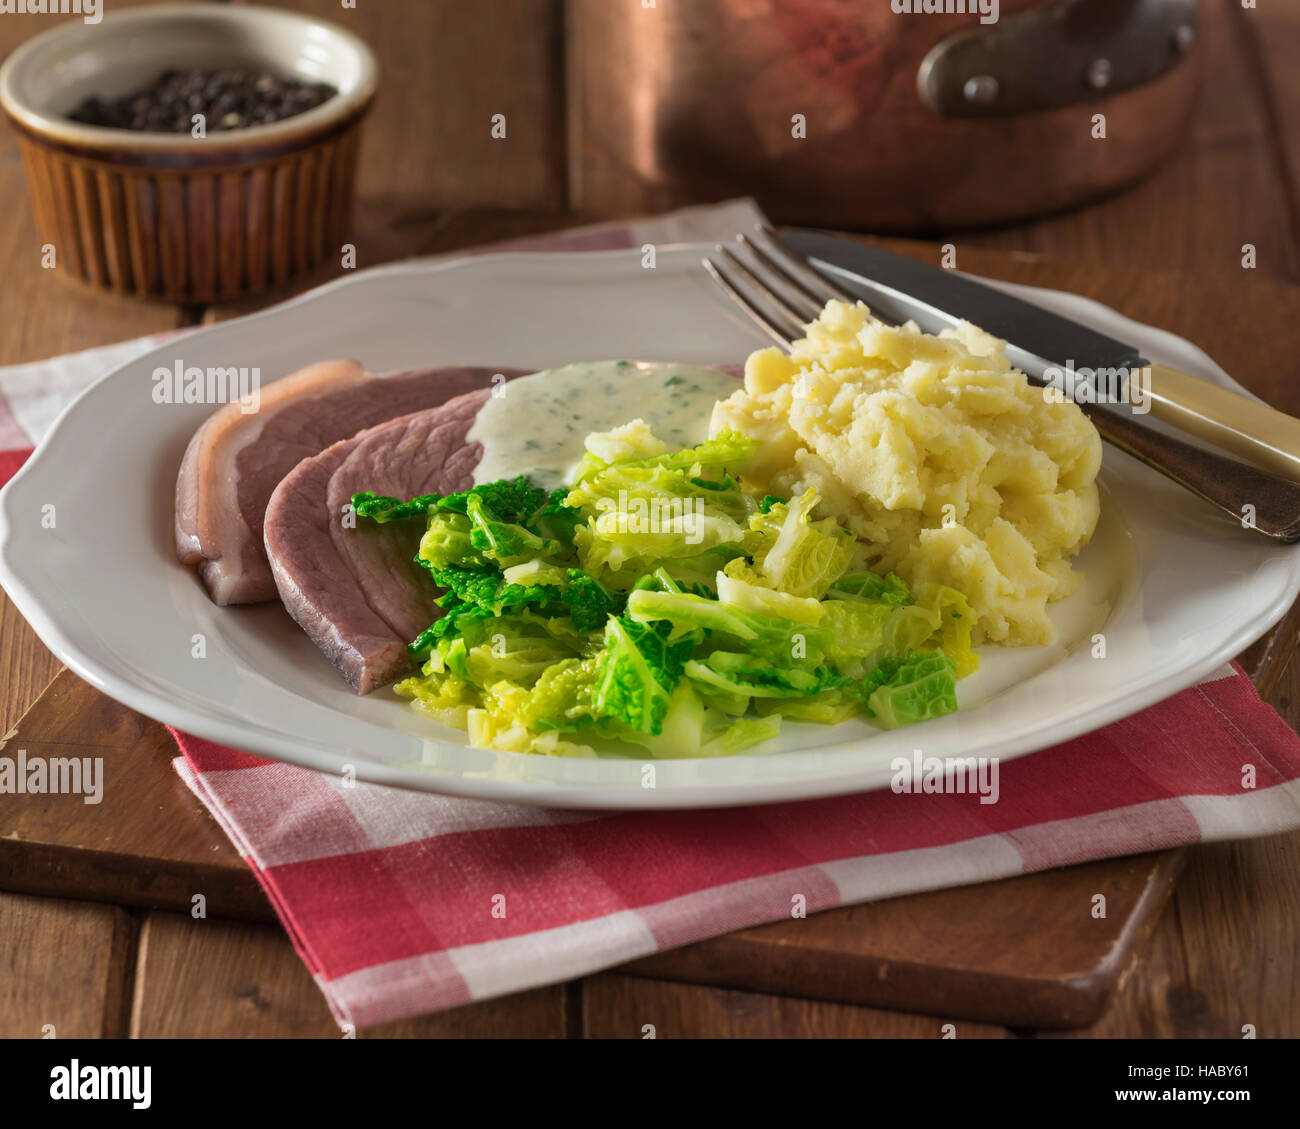 Irish bacon and cabbage with parsley sauce. Ireland Food Stock Photo